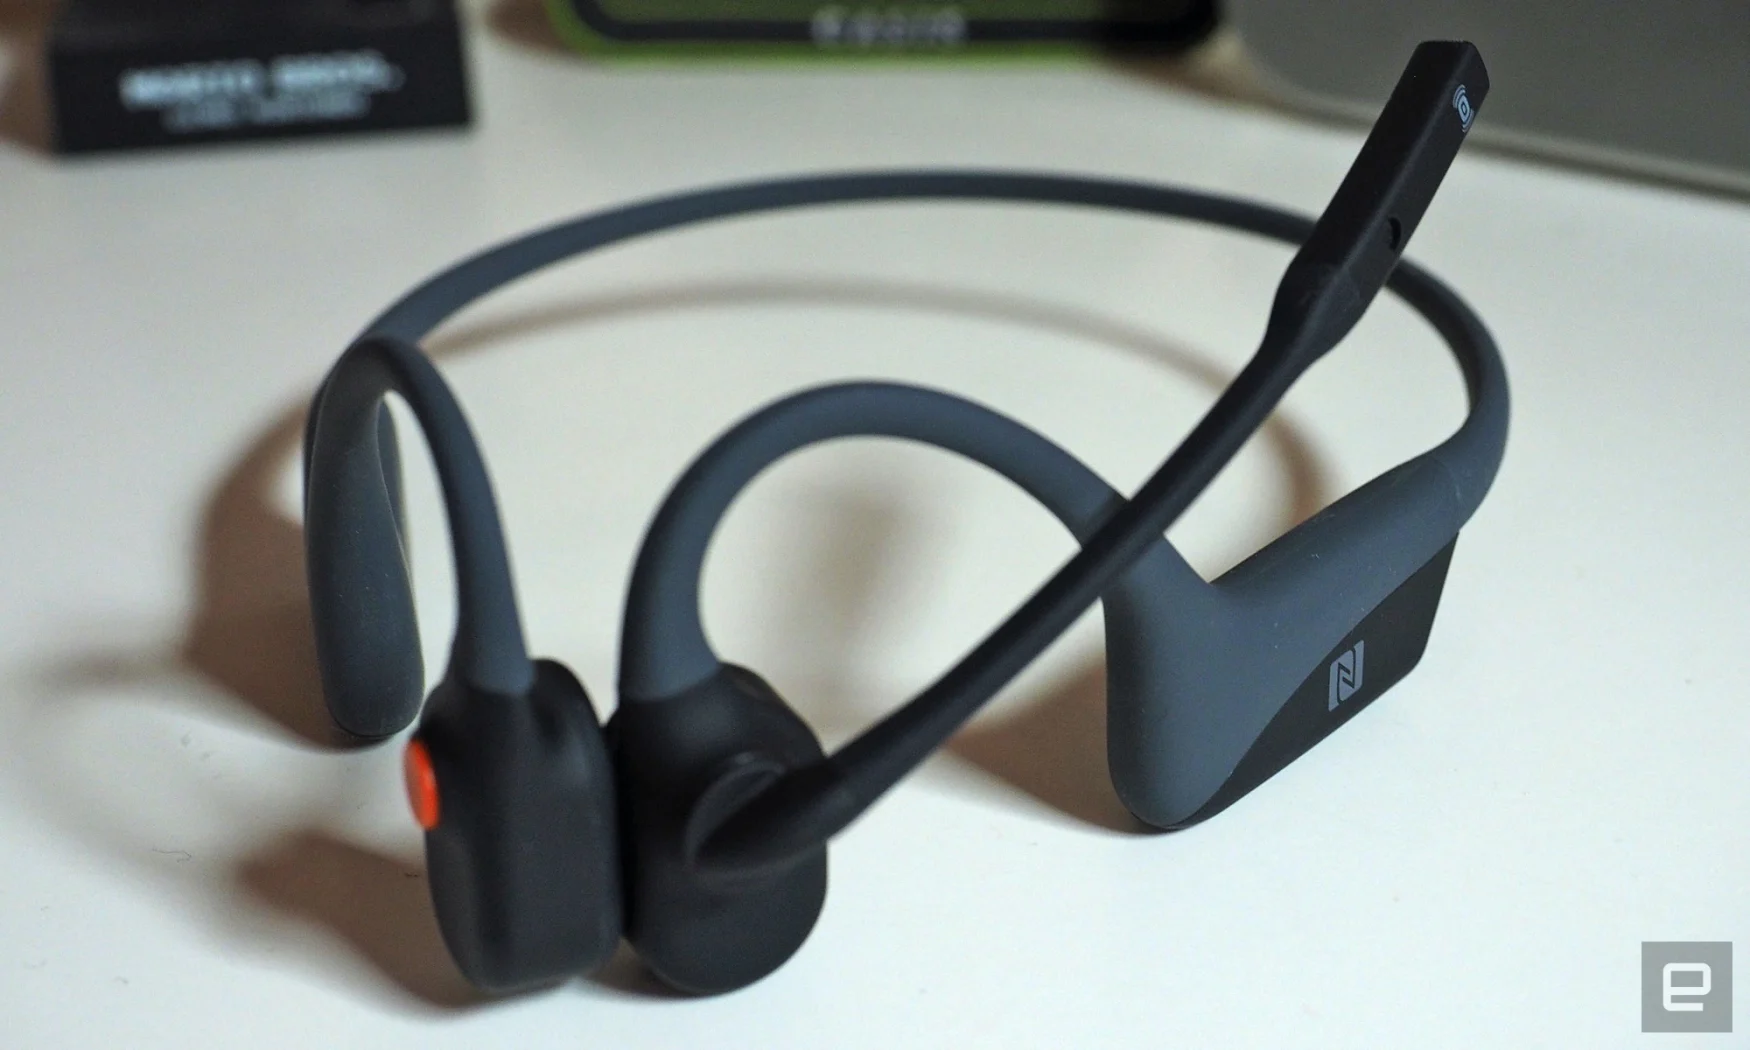 Aftershokz office-oriented bone conduction headphones.